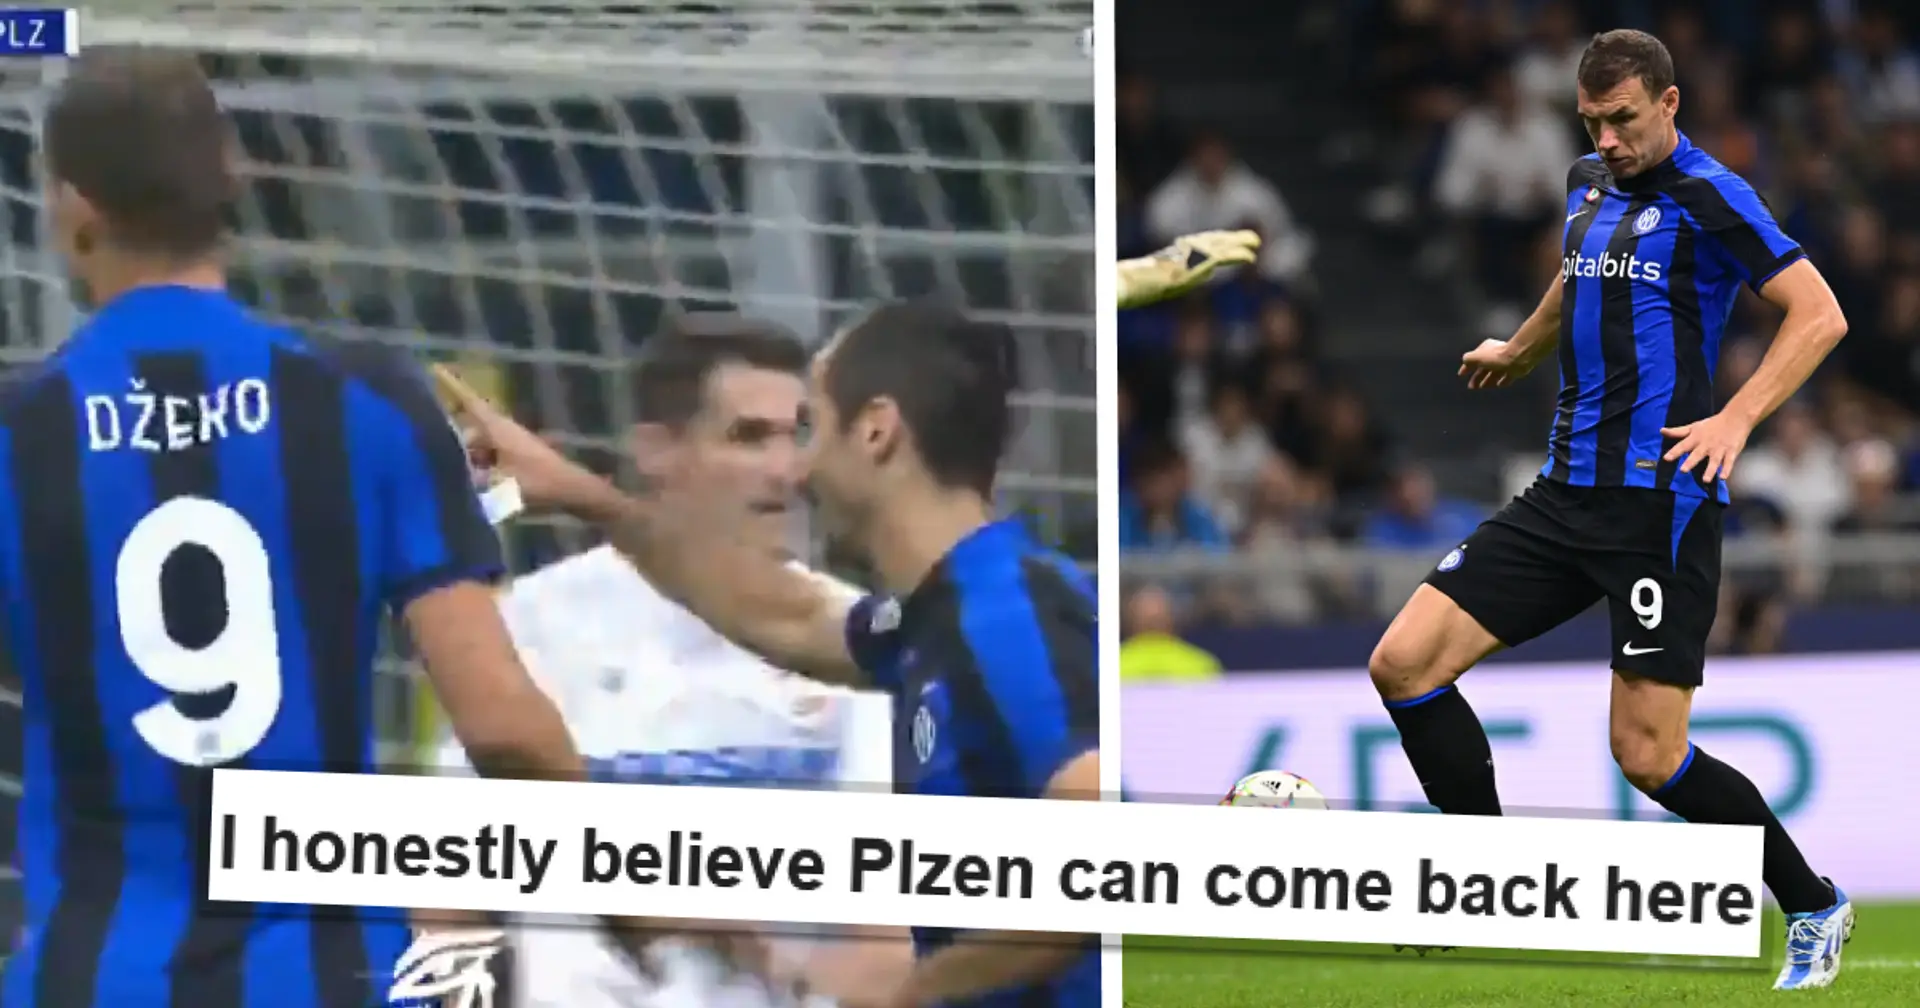 'Europa League merchants': Fans troll Barca as Inter takes 3-goal lead against Plzen